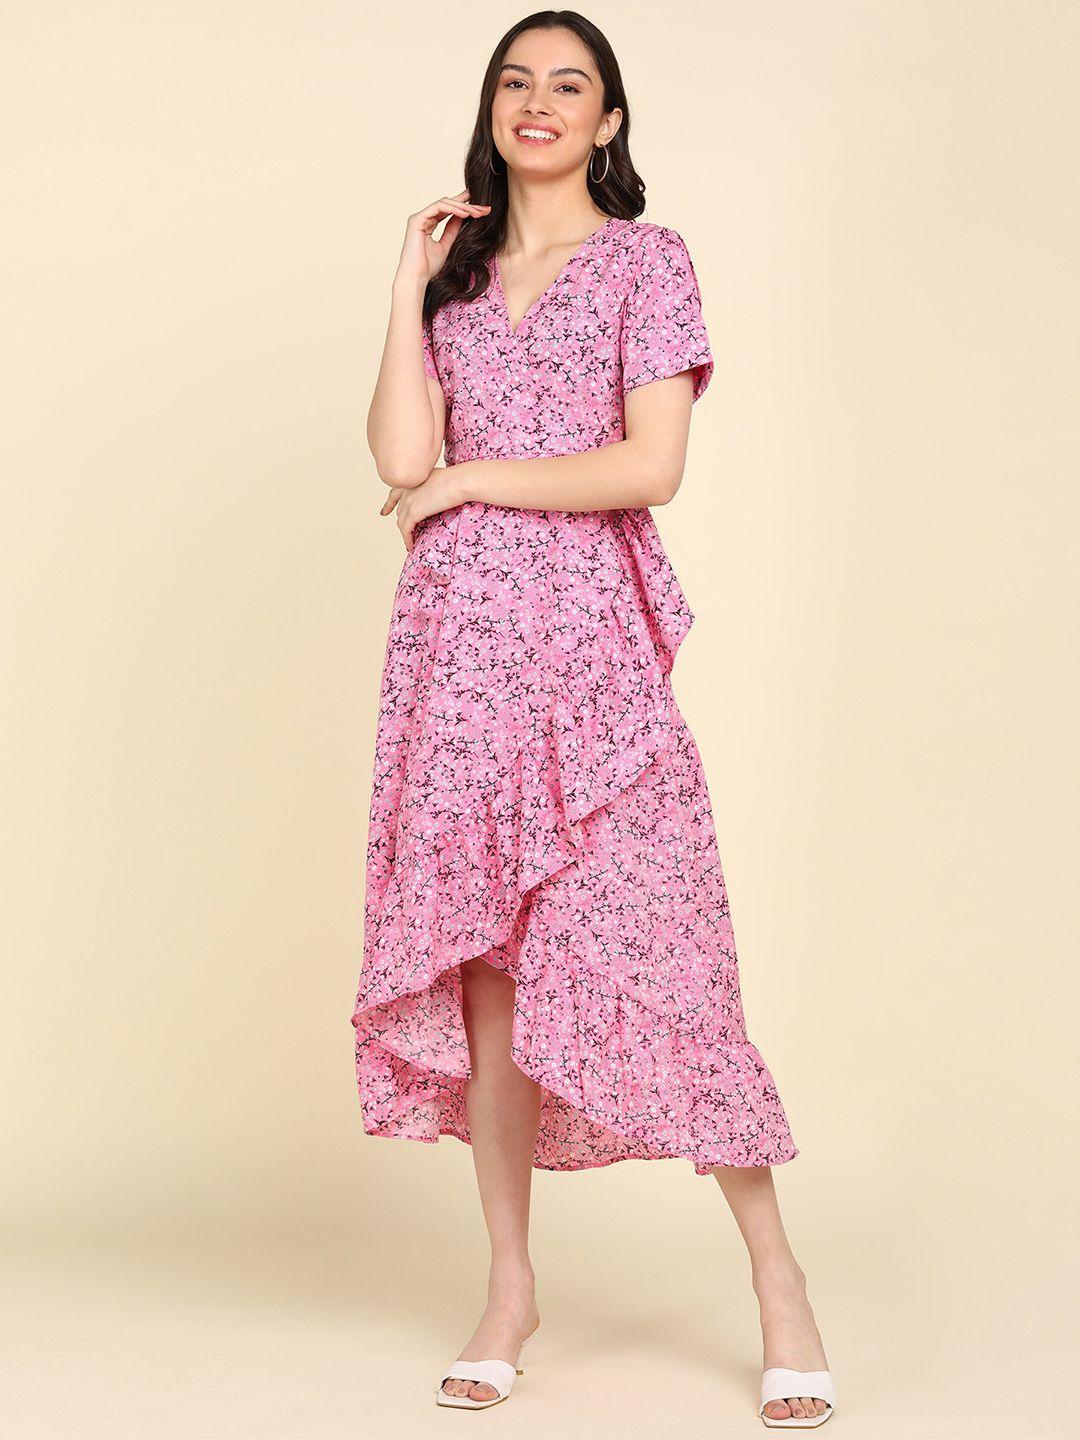 znx clothing floral midi dress